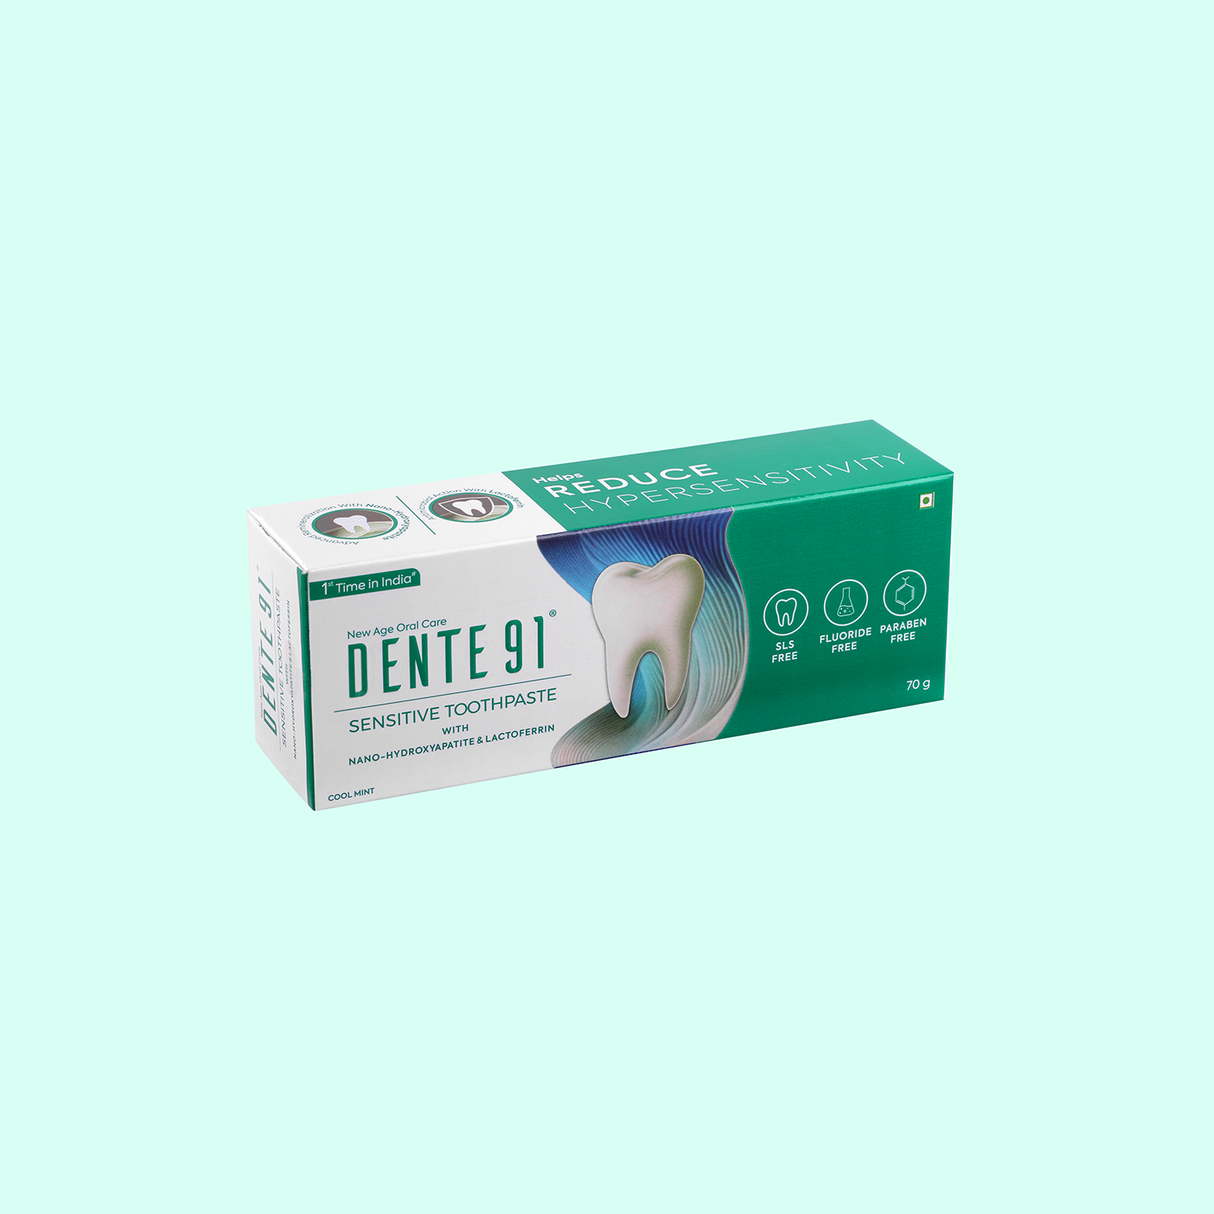 Dente91 Sensitive Toothpaste